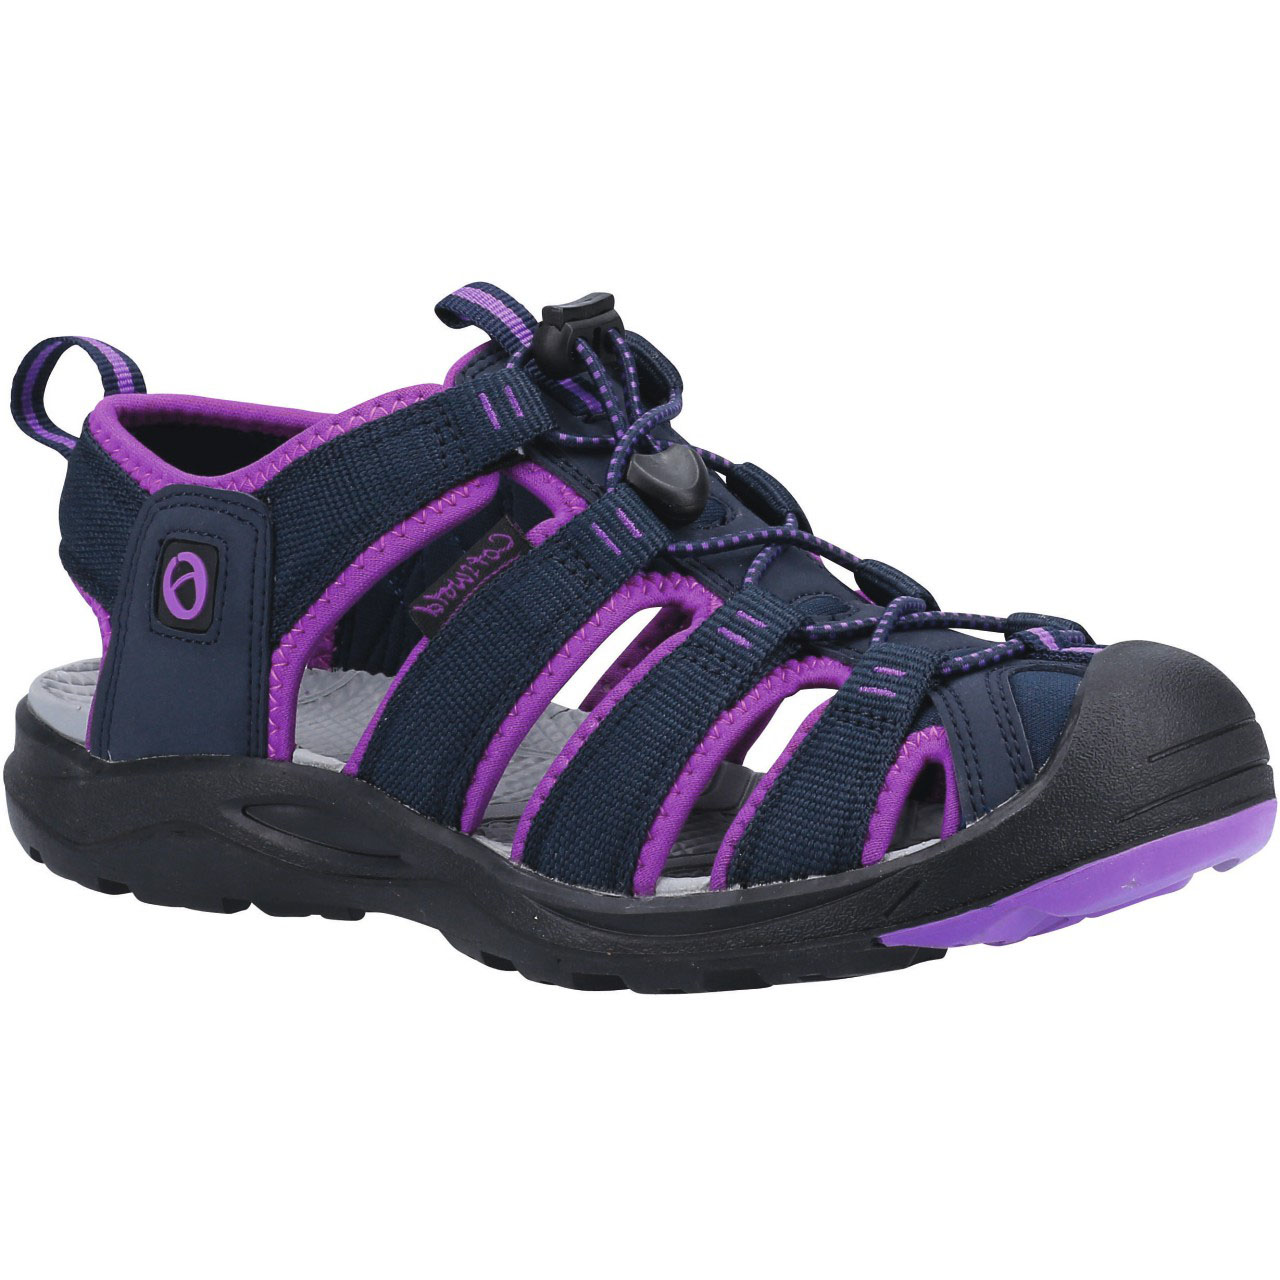 Ladies Trekker Sandals